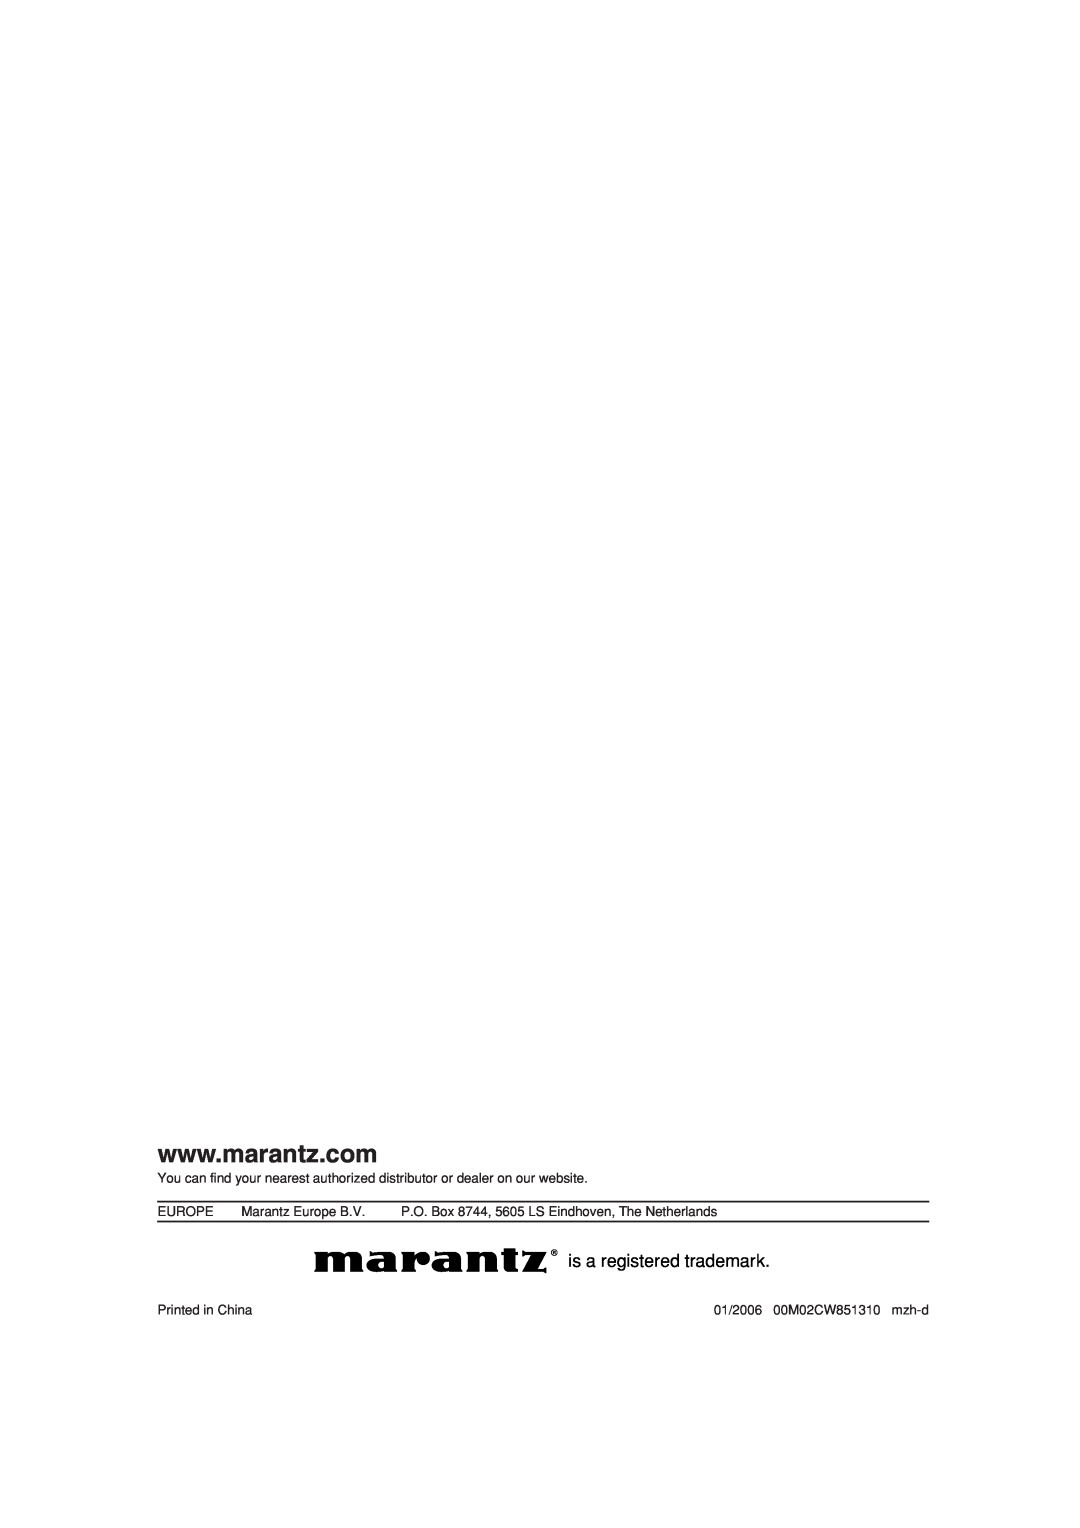 Marantz ST6001 manual is a registered trademark 